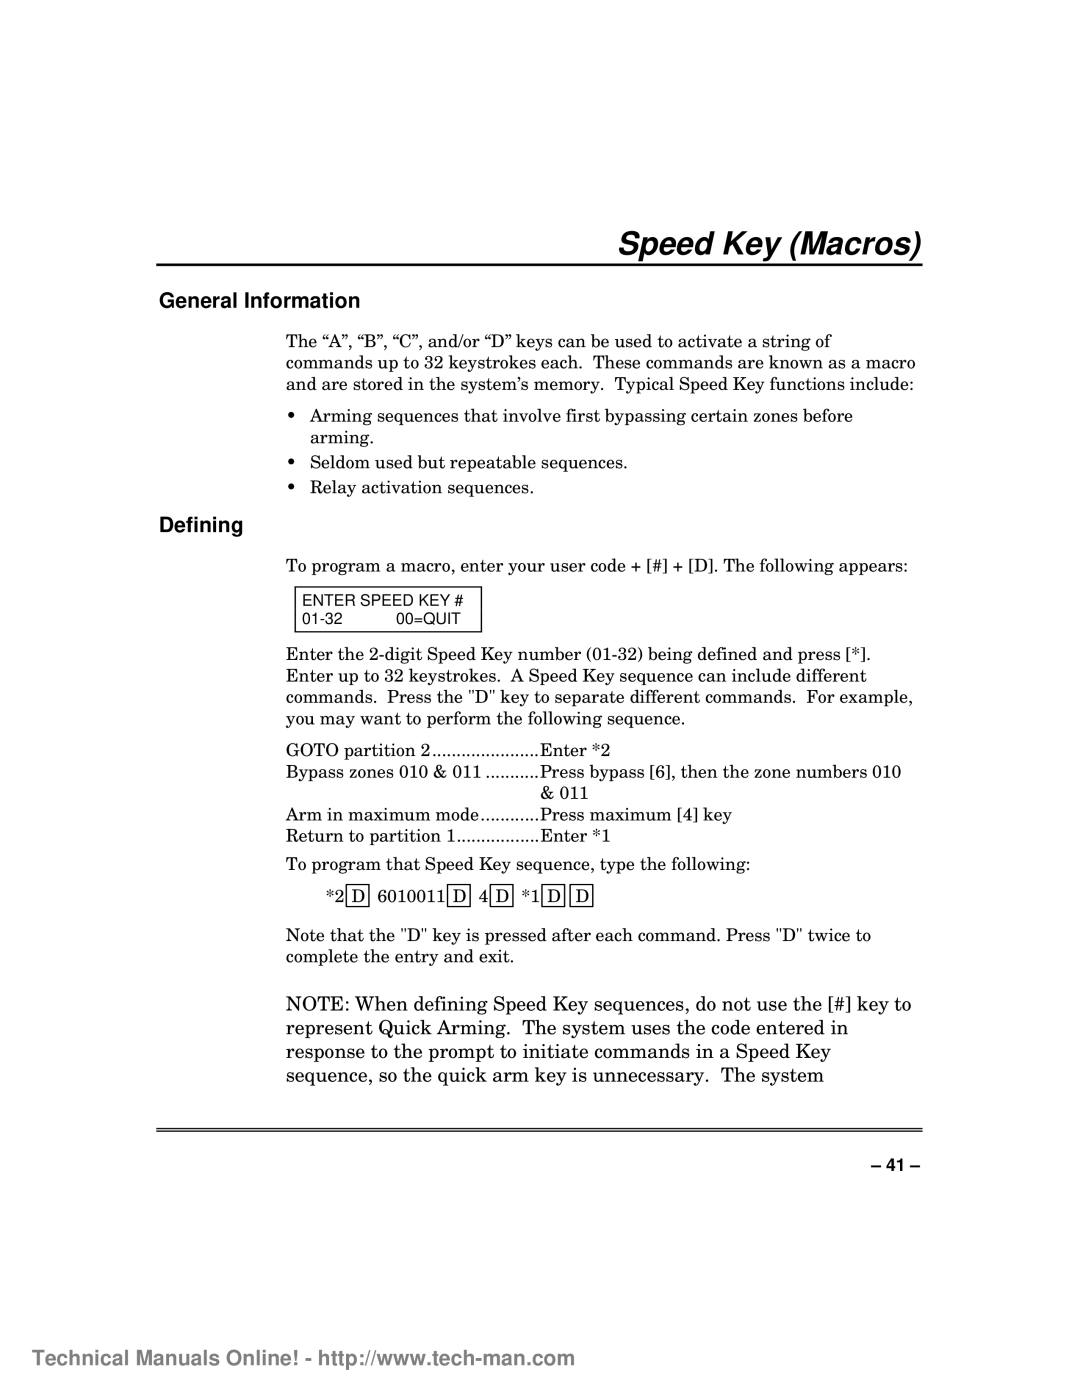 First Alert FA1600C/CA/CB, fa1600c technical manual Speed Key Macros, Defining, General Information 